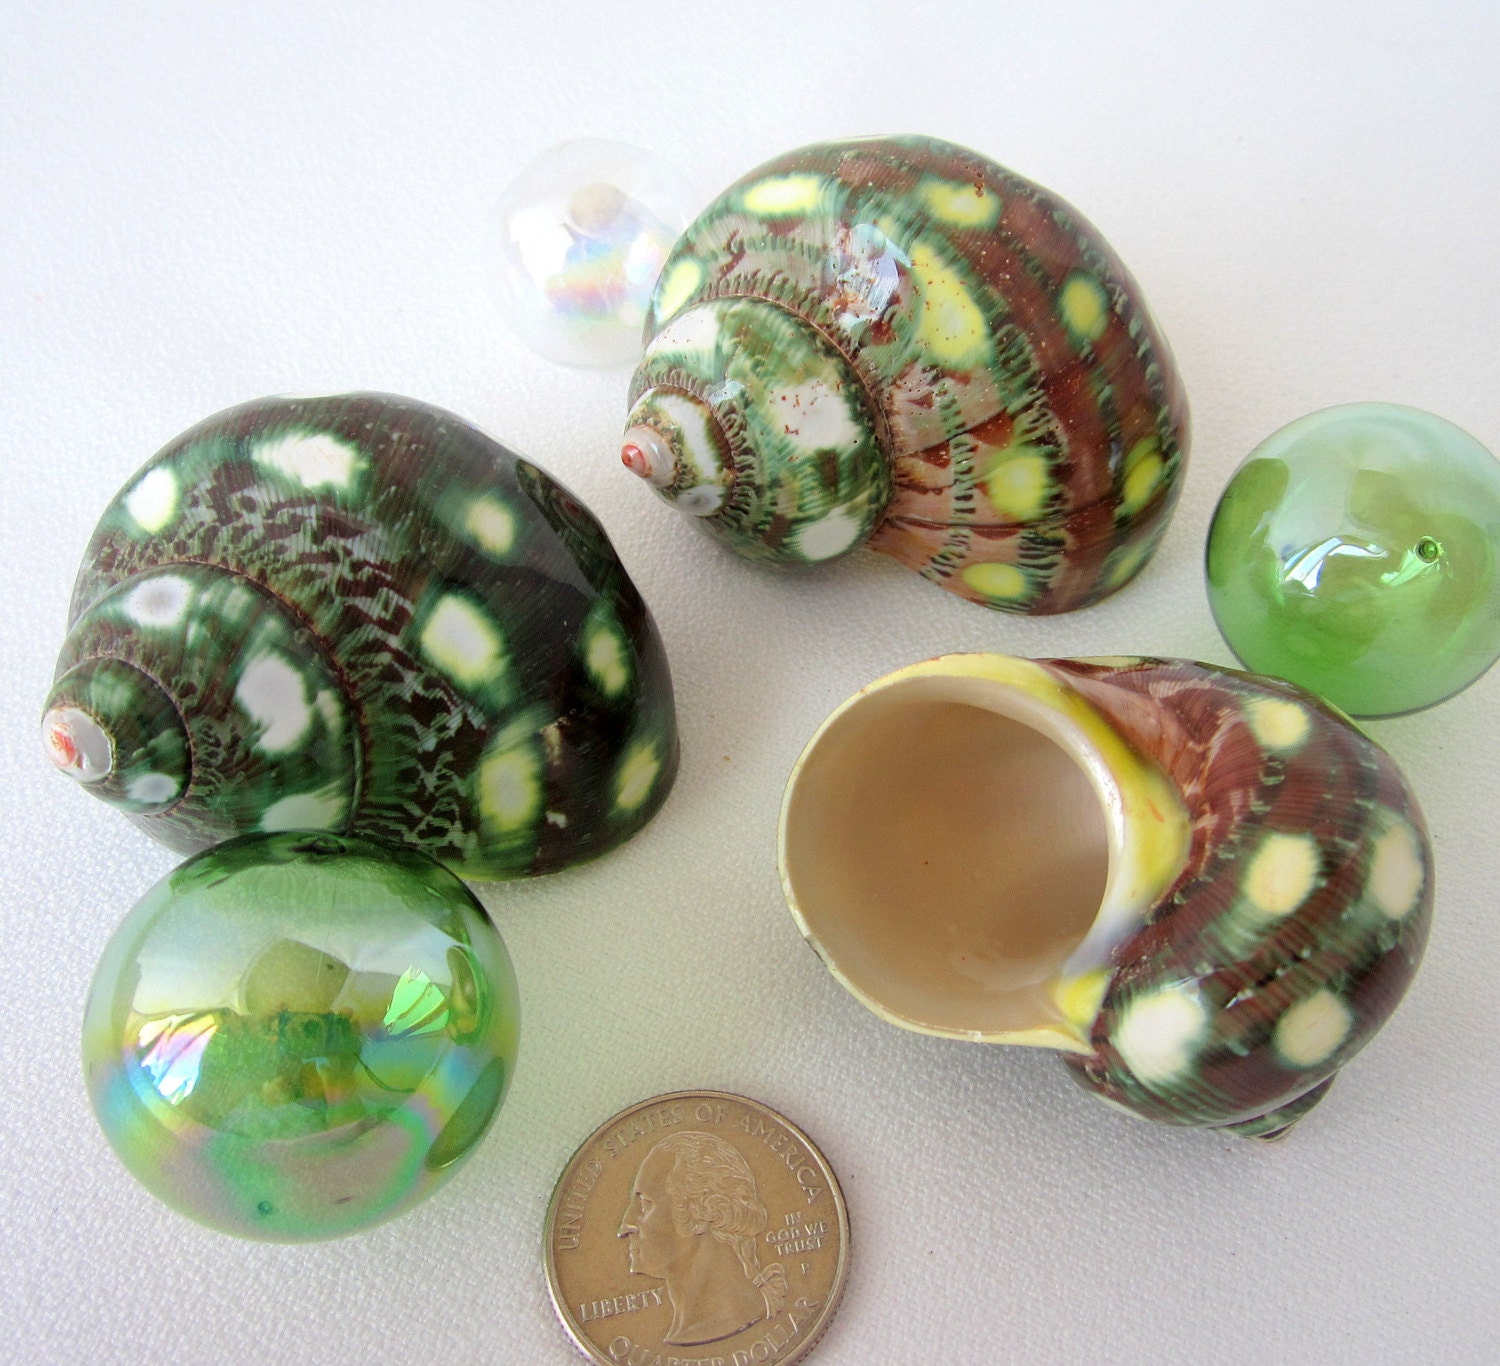 Round Capiz Shells For DIY Seashell Crafts, Volume Discount, #1 1